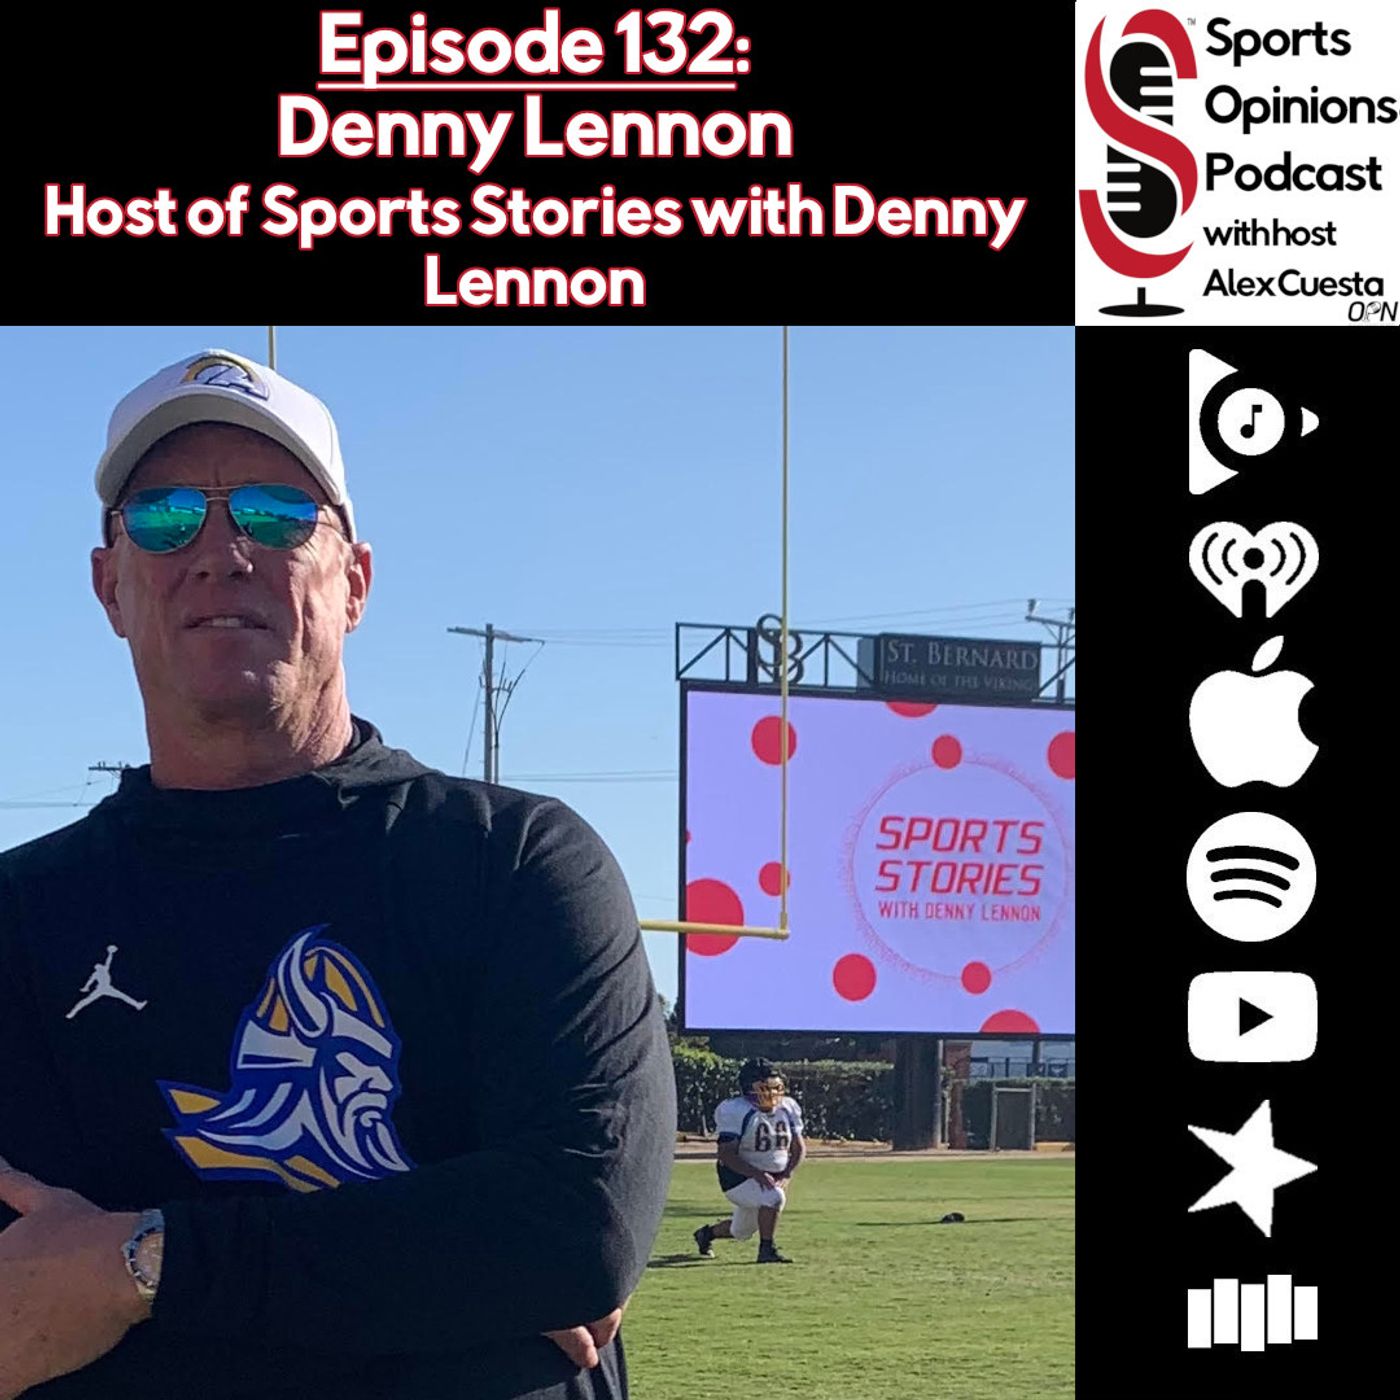 132. Denny Lennon, Host of Sports Stories with Denny Lennon